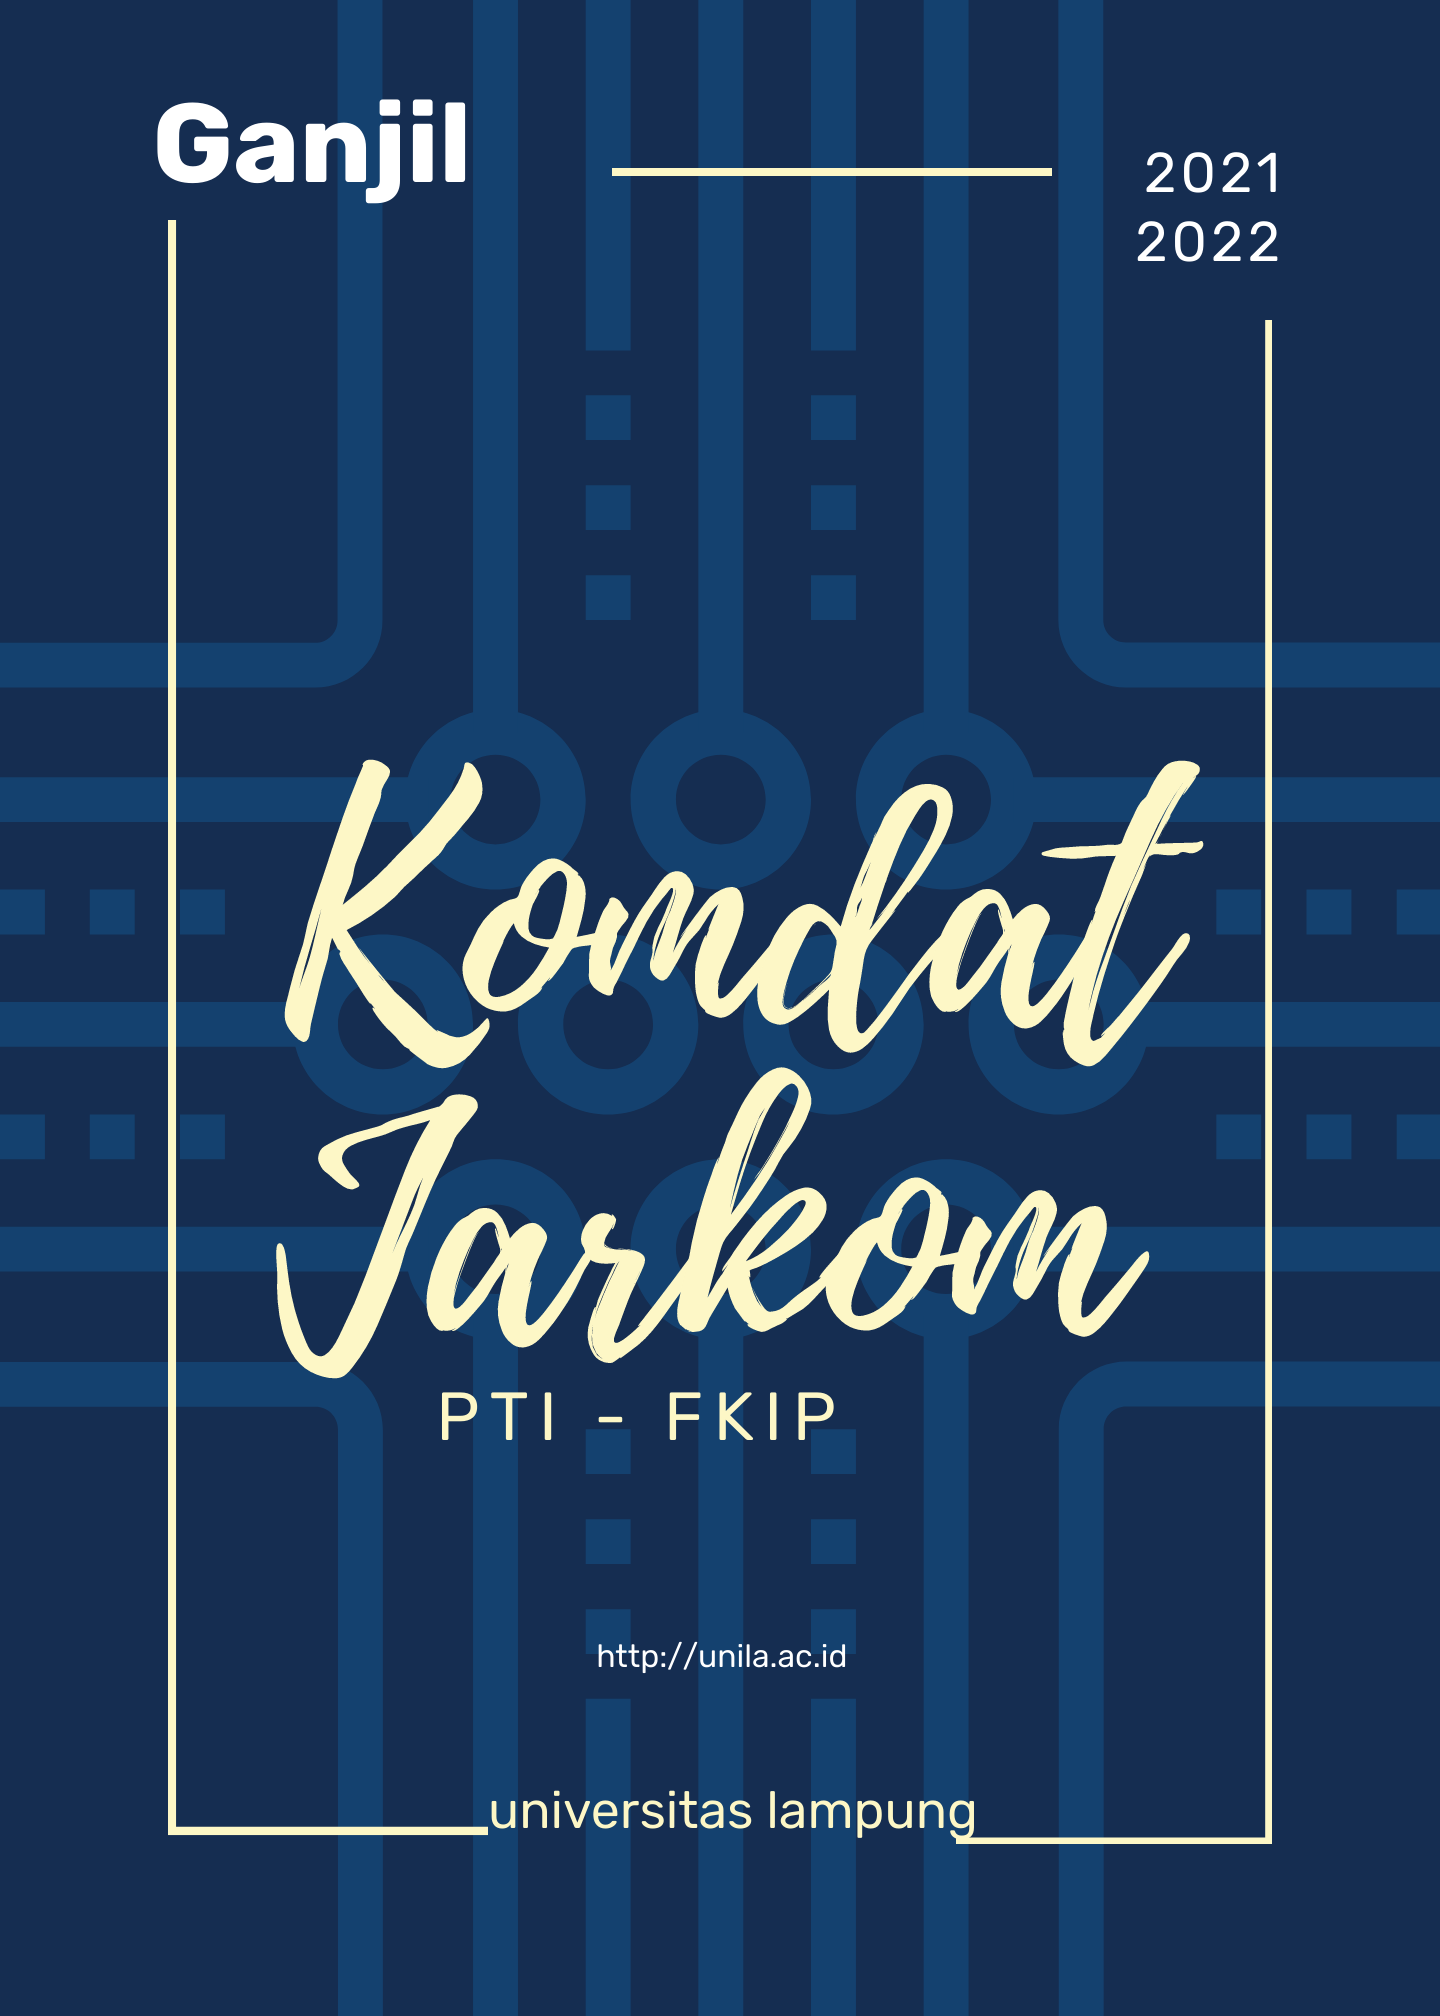 FKIP S1 PTI - Komunikasi data dan Jaringan Komputer - Ganjil 2021/2022